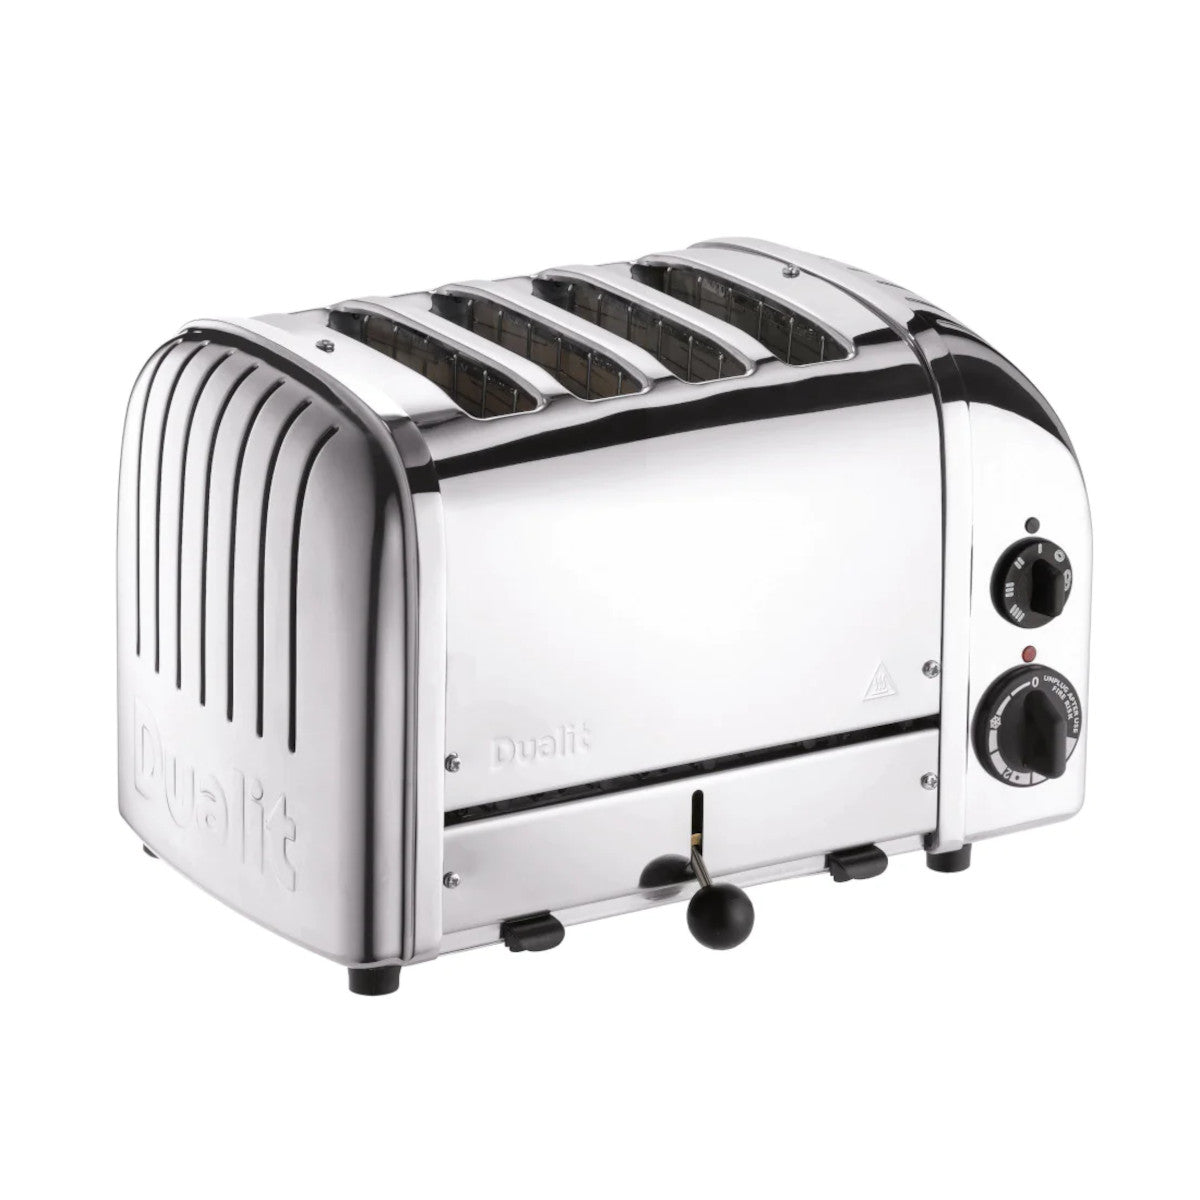 Dualit 4-Slice Toaster Stainless Steel